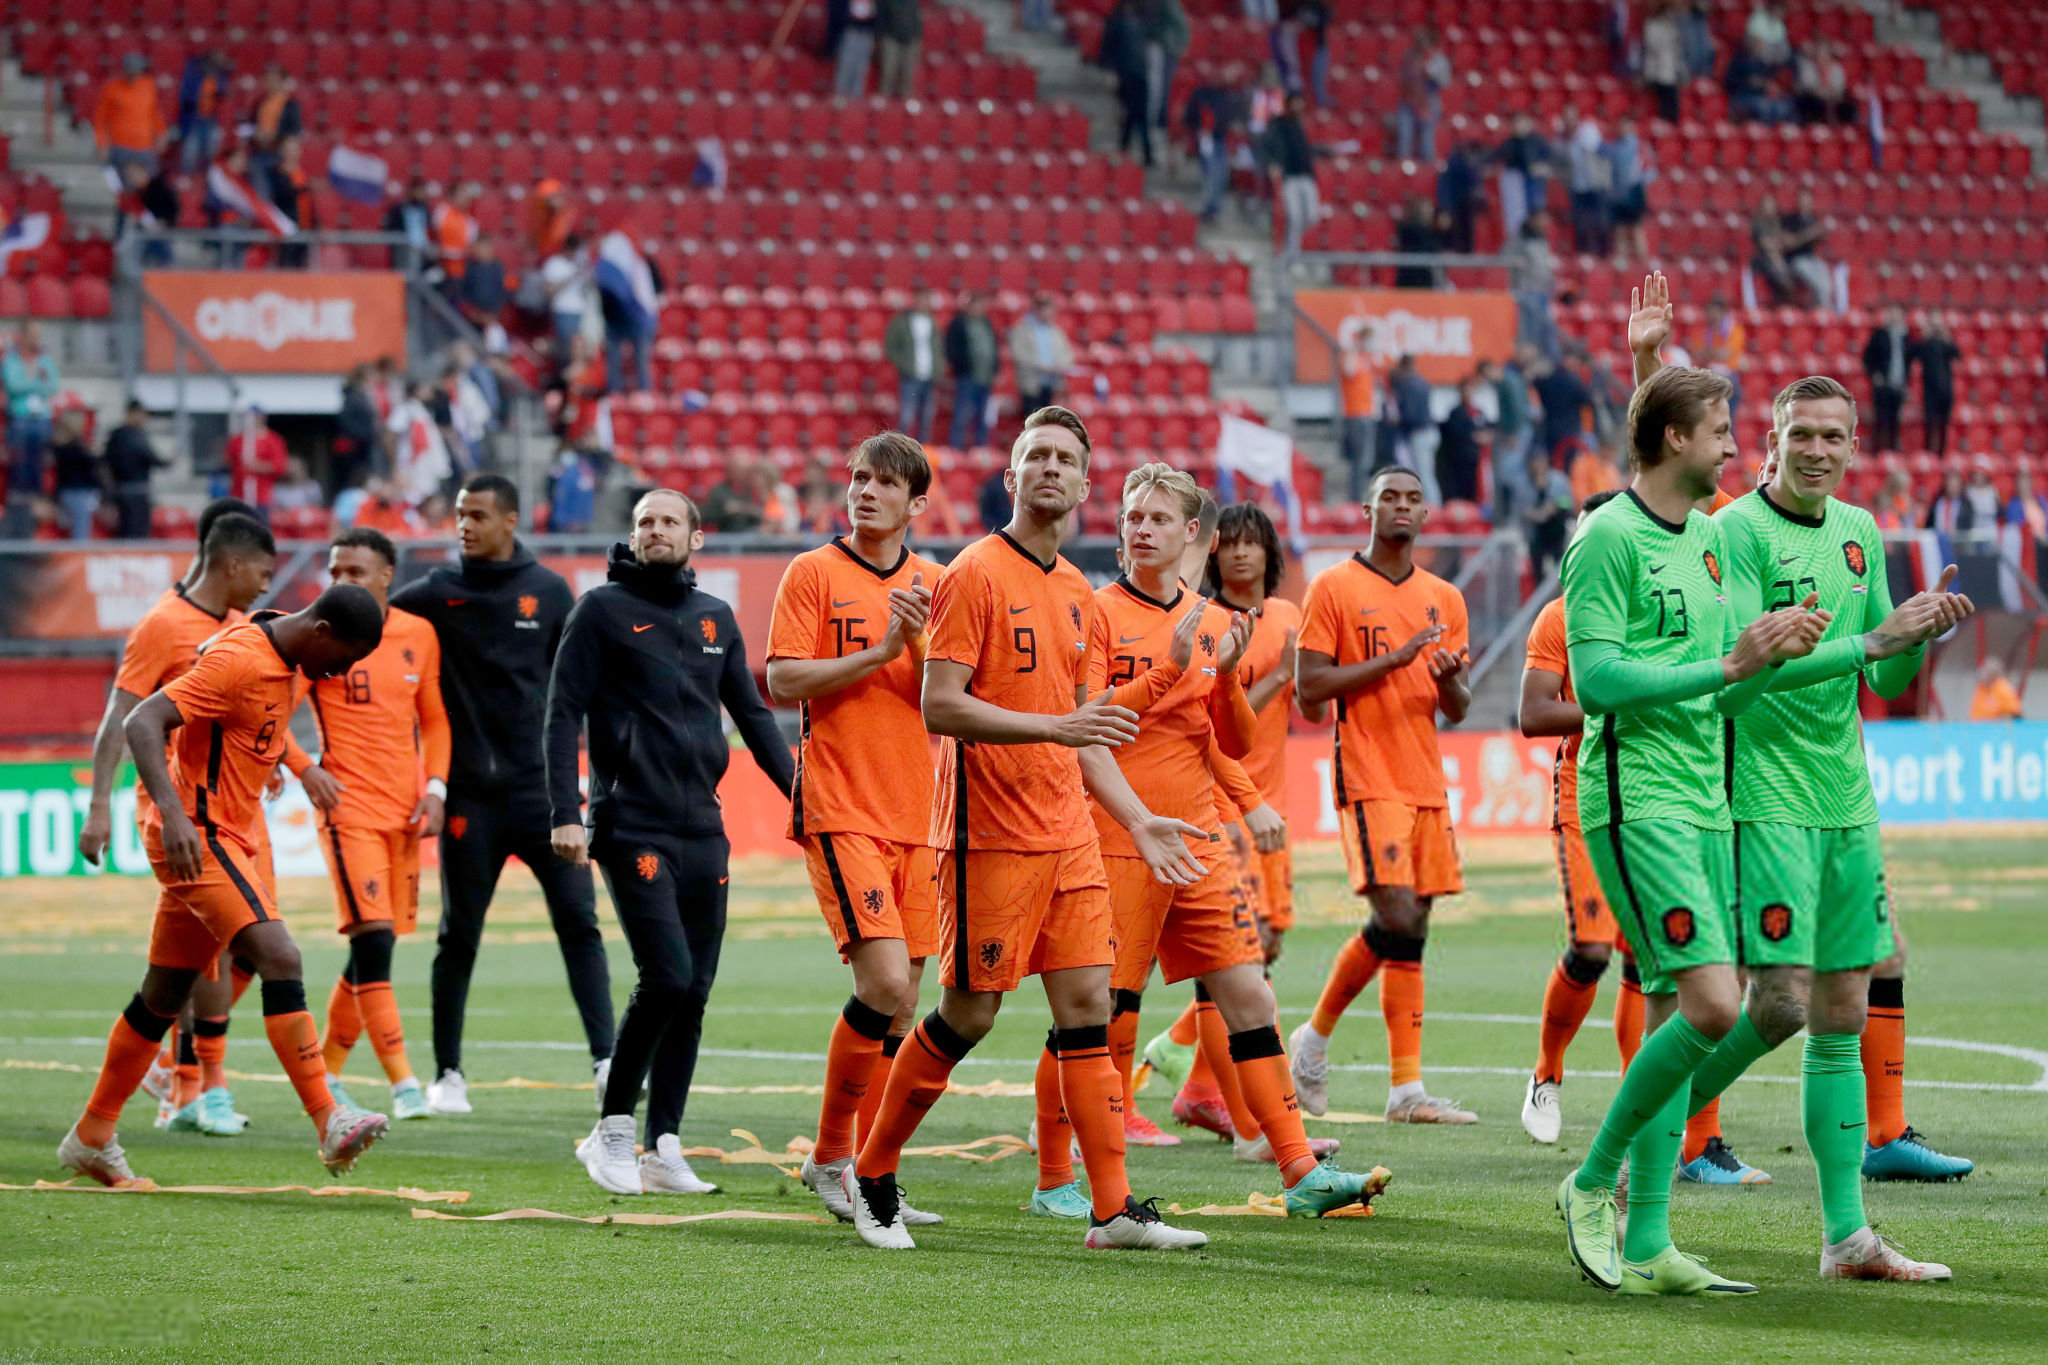 De Jong with the Netherlands